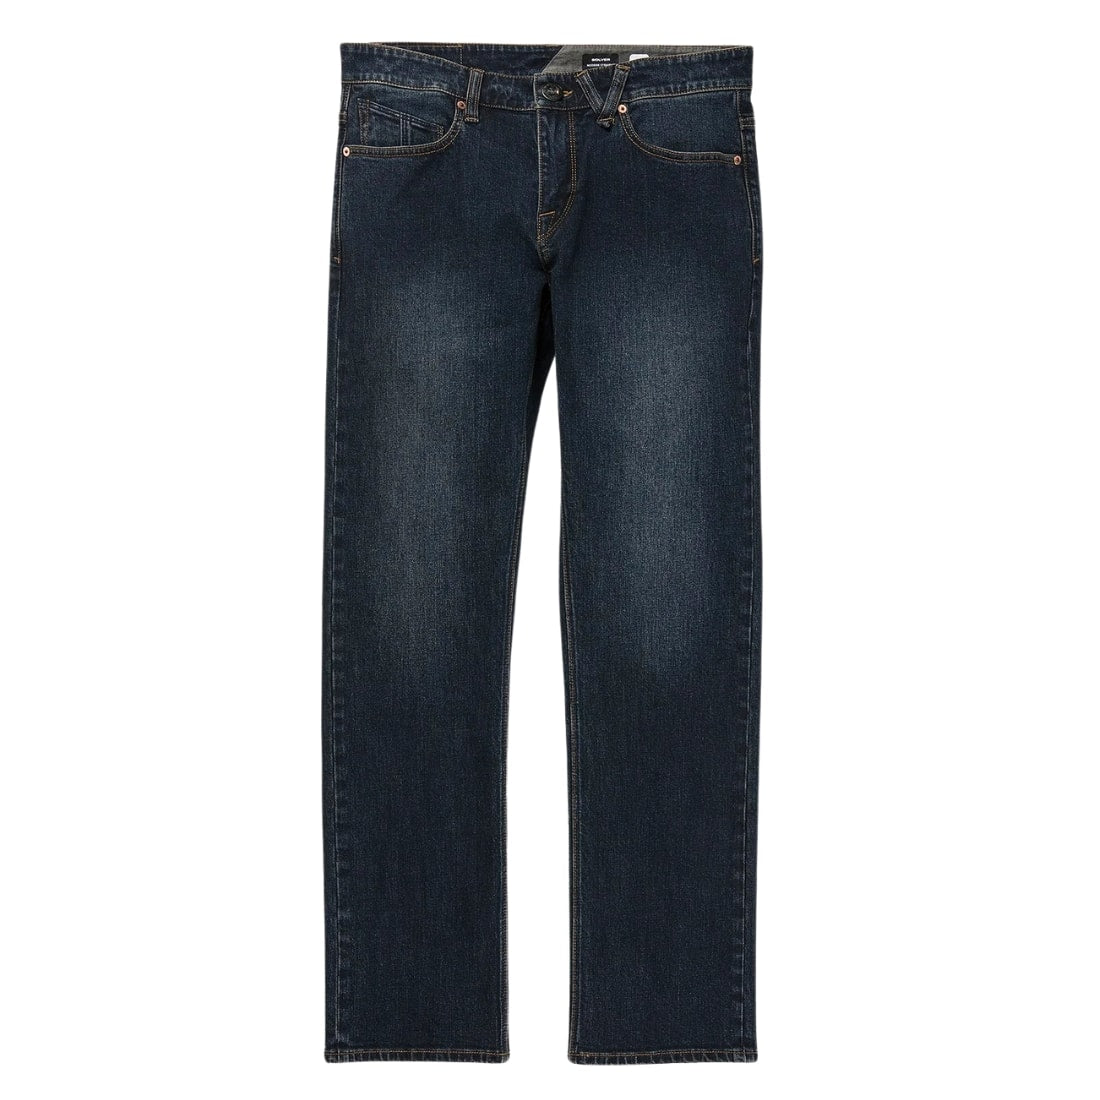 Volcom Solver Denim - New Vintage Blue - Mens Regular/Straight Denim Jeans by Volcom